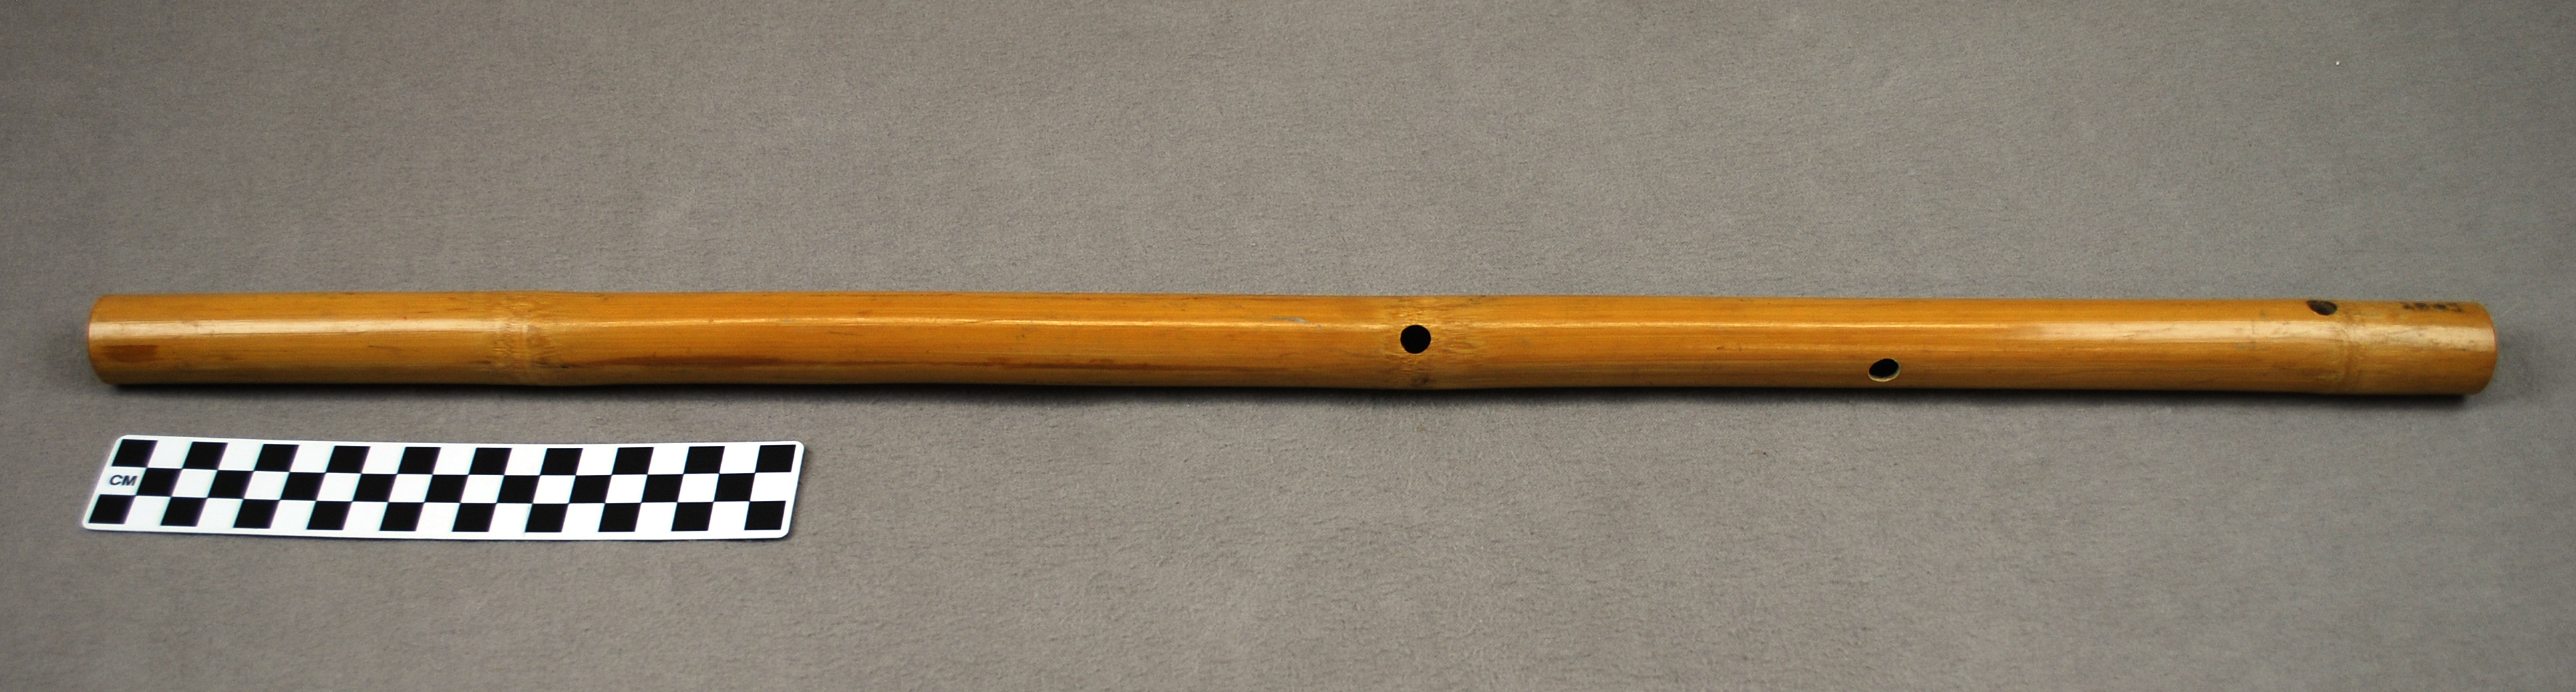 Object: Flute (wooden “Ti” flute) | UTSA Institute Of Texan Cultures